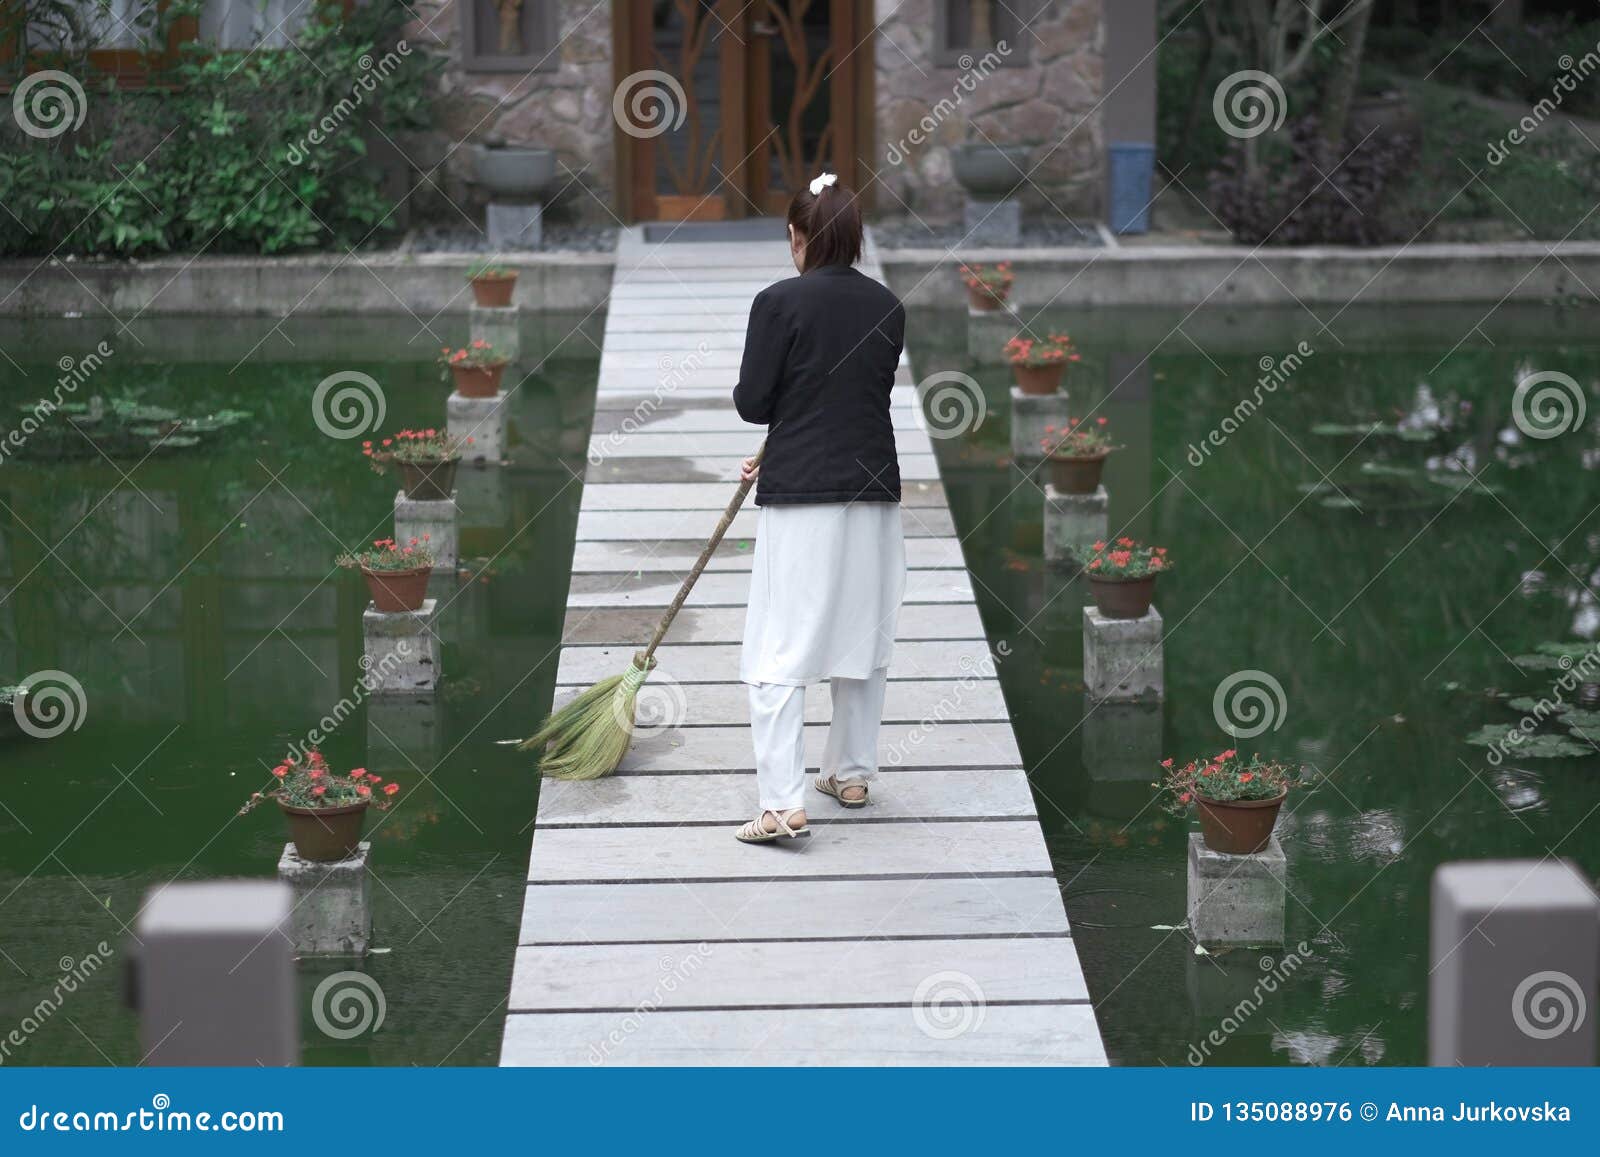 woman brings cleanness on wooden walkway